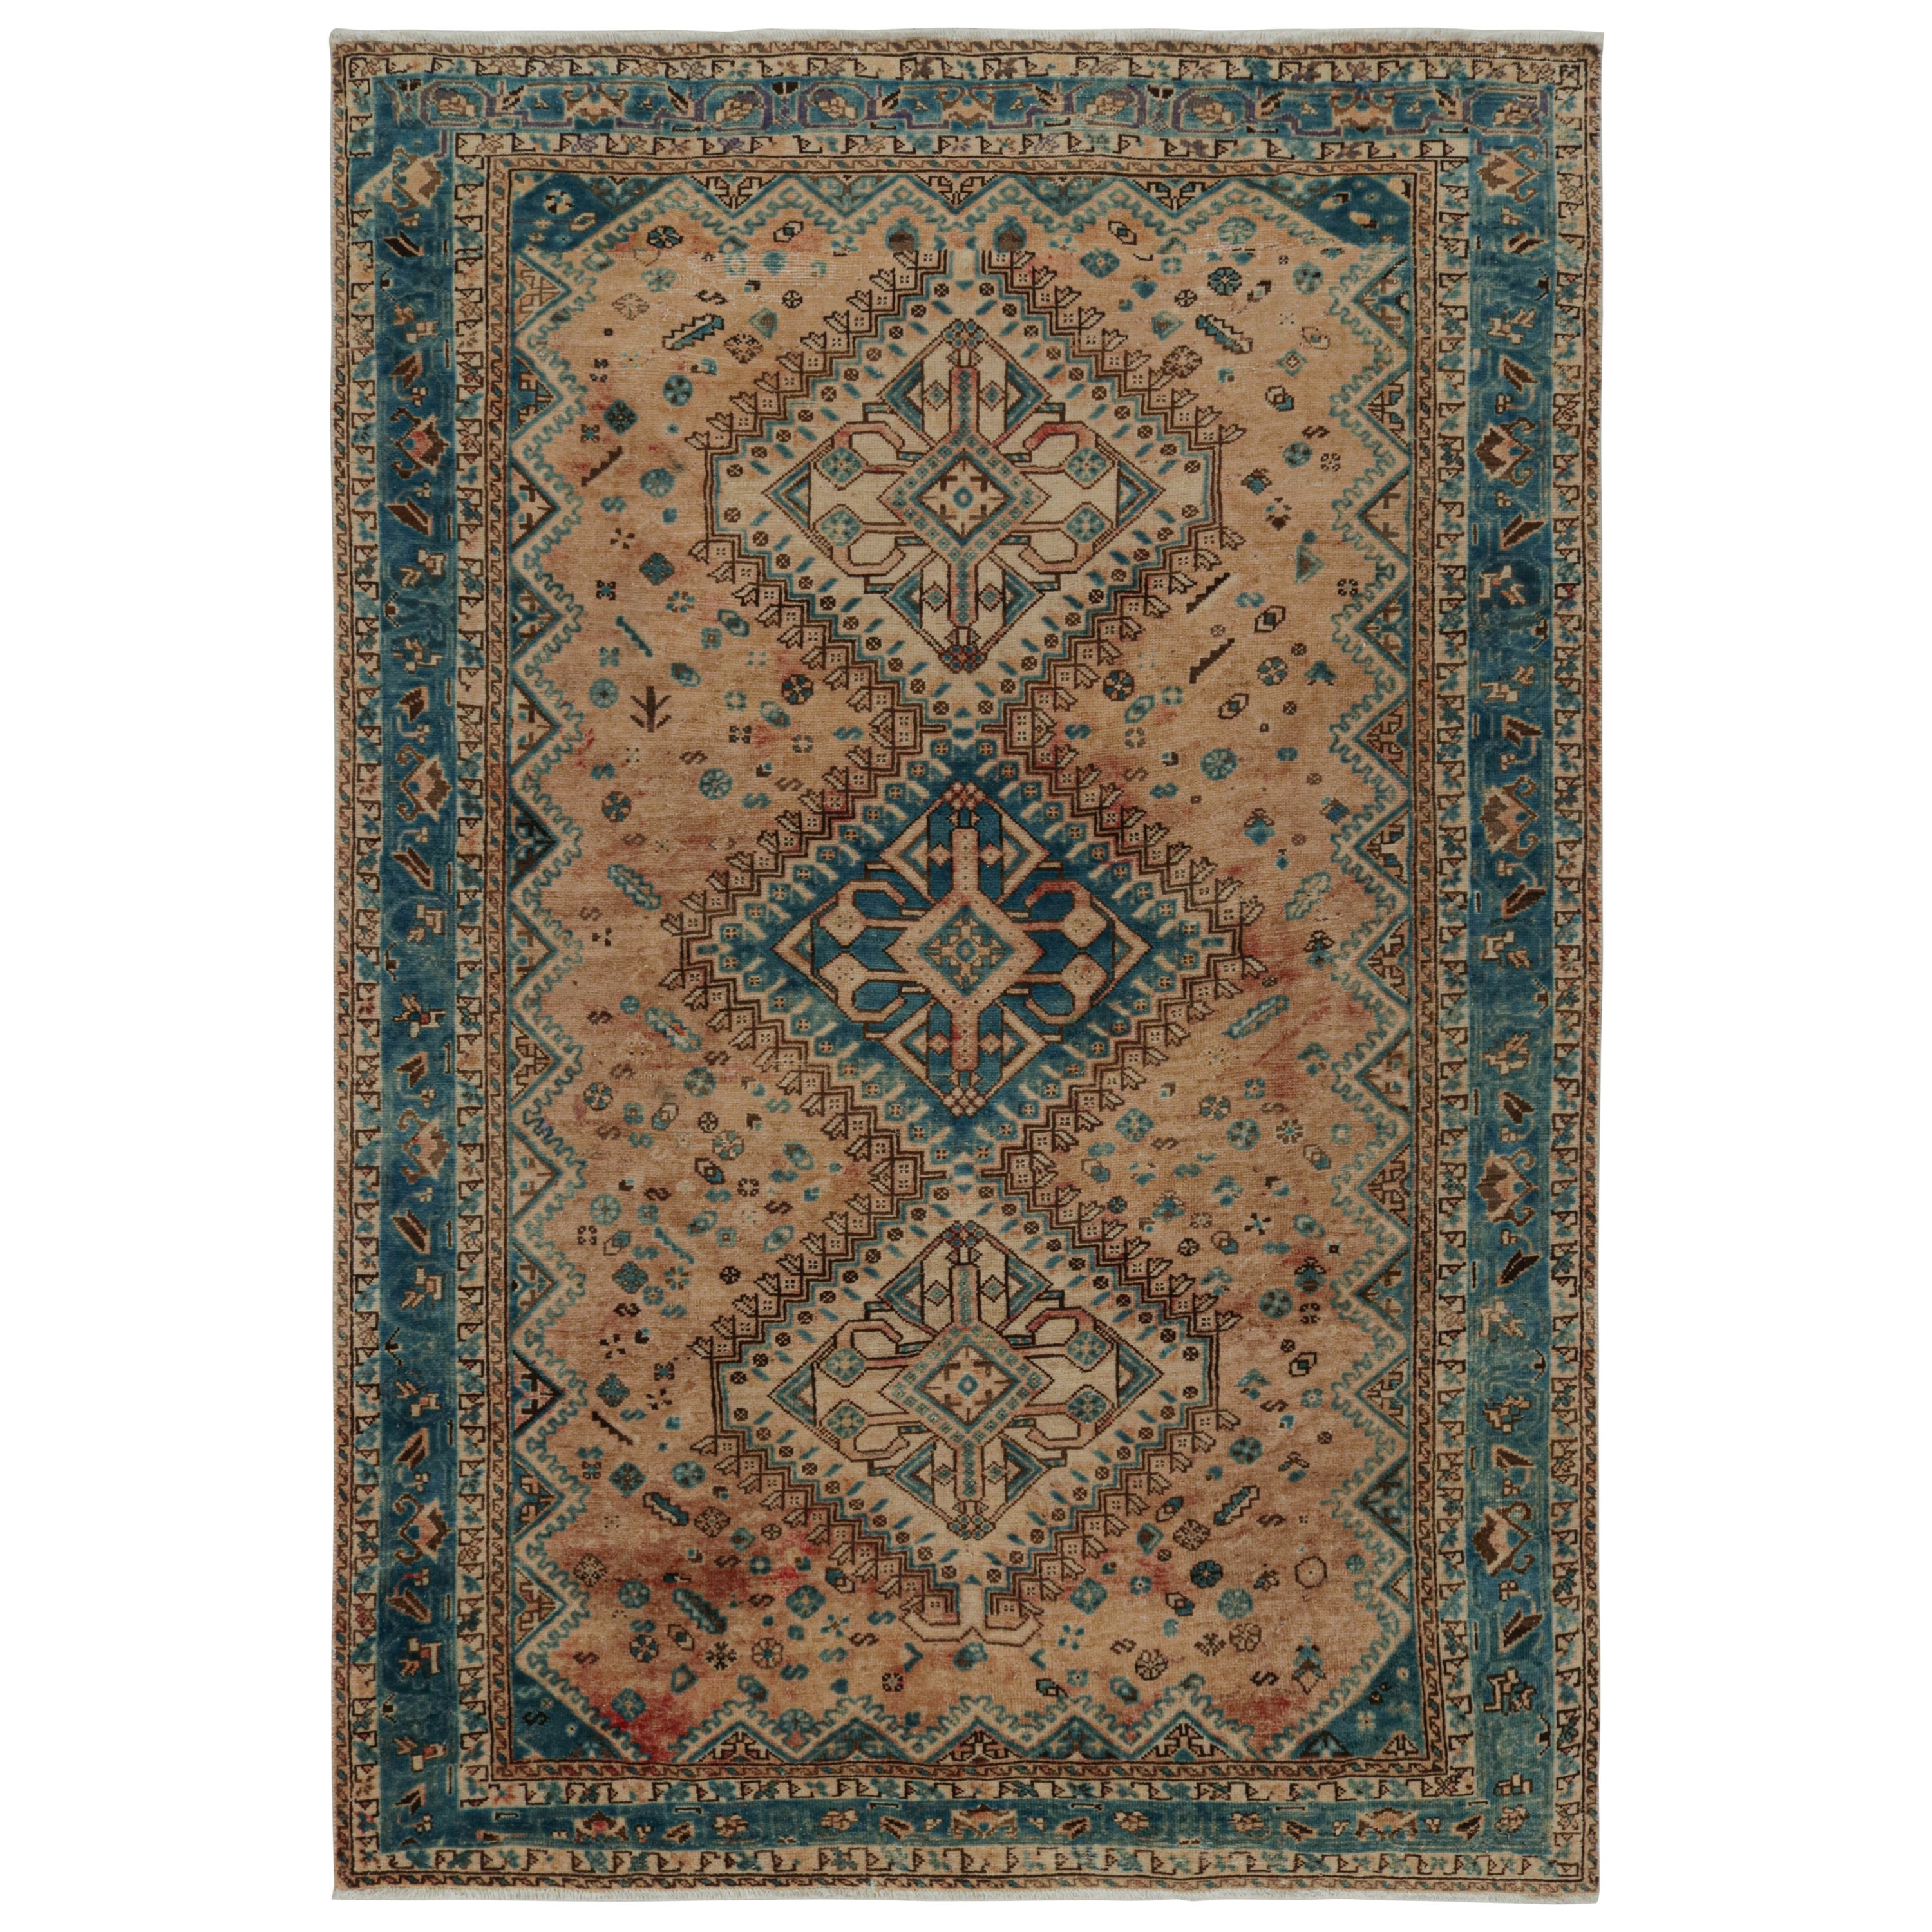 Vintage Persian Shiraz rug in Beige-Brown & Blue Floral Patterns by Rug & Kilim For Sale